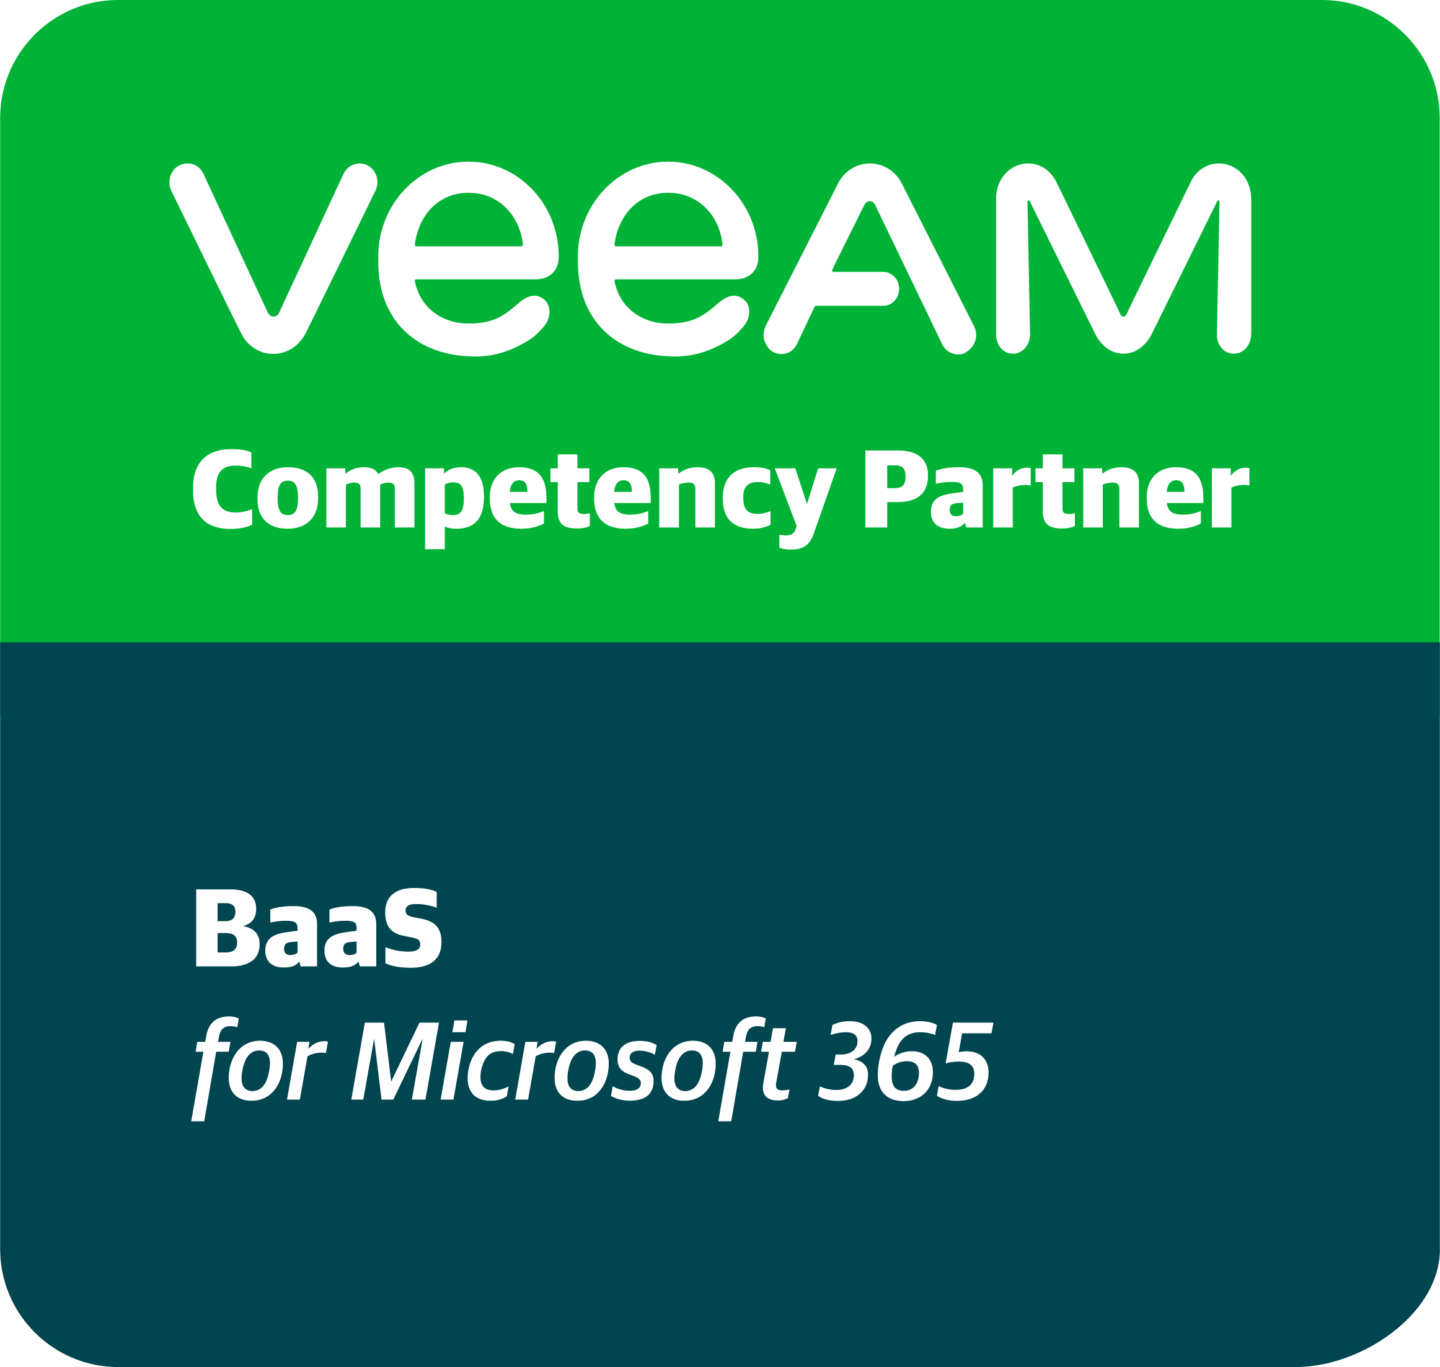 TIMG Veeam Competency Partner BaaS for Microsoft 365